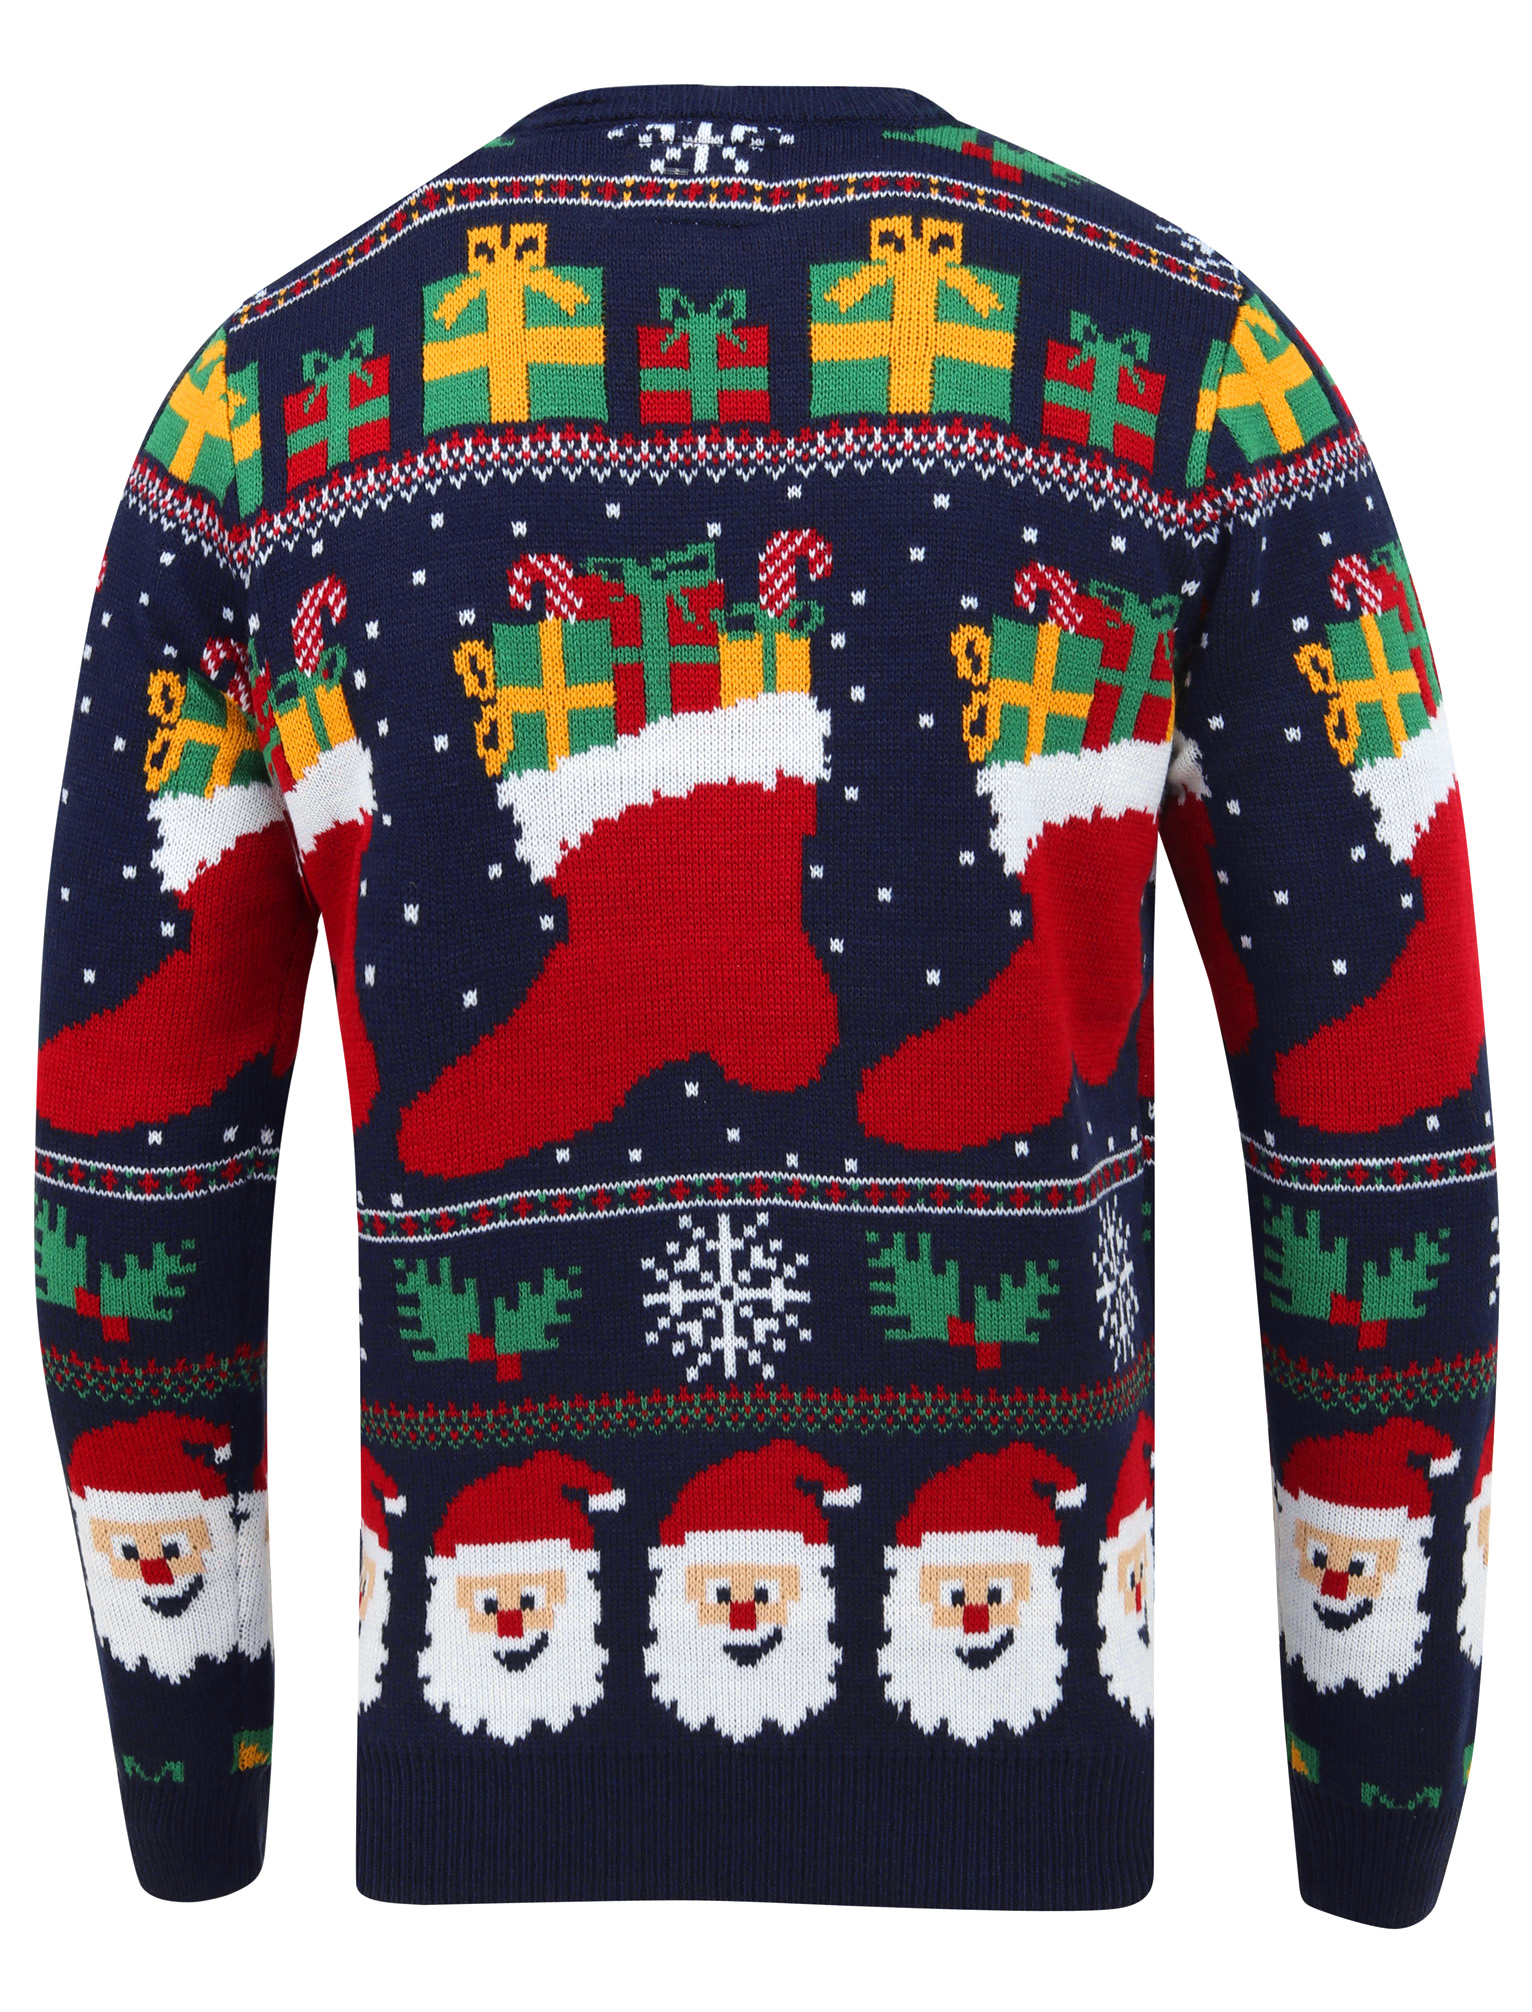 Christmas Jumper Men S Light Up Led Xmas Reindeer Snowman Fairisle Sweater Top Ebay